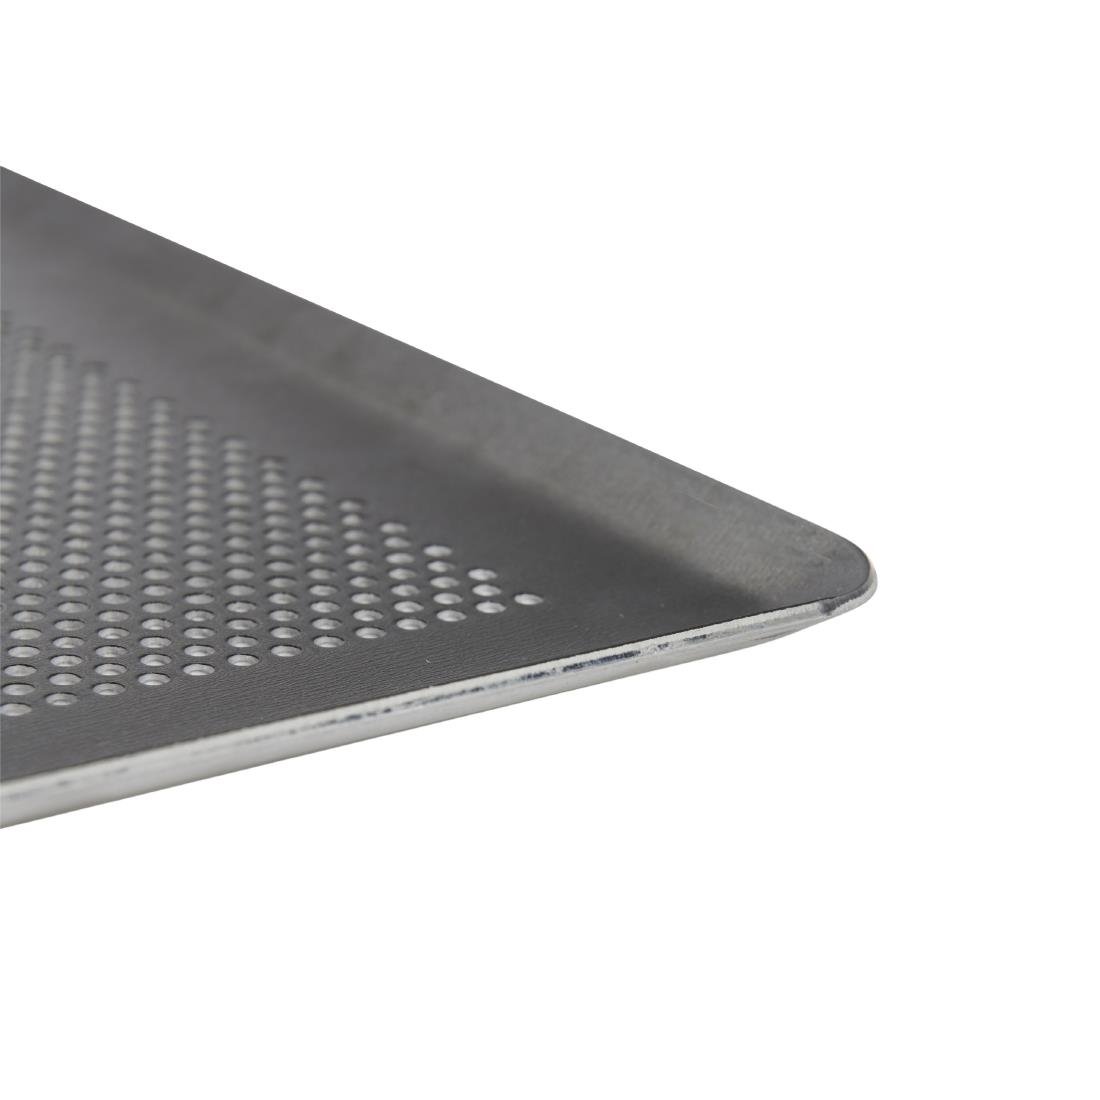 DZ709 De Buyer Perforated Non-stick Aluminium Baking Tray 600x400mm